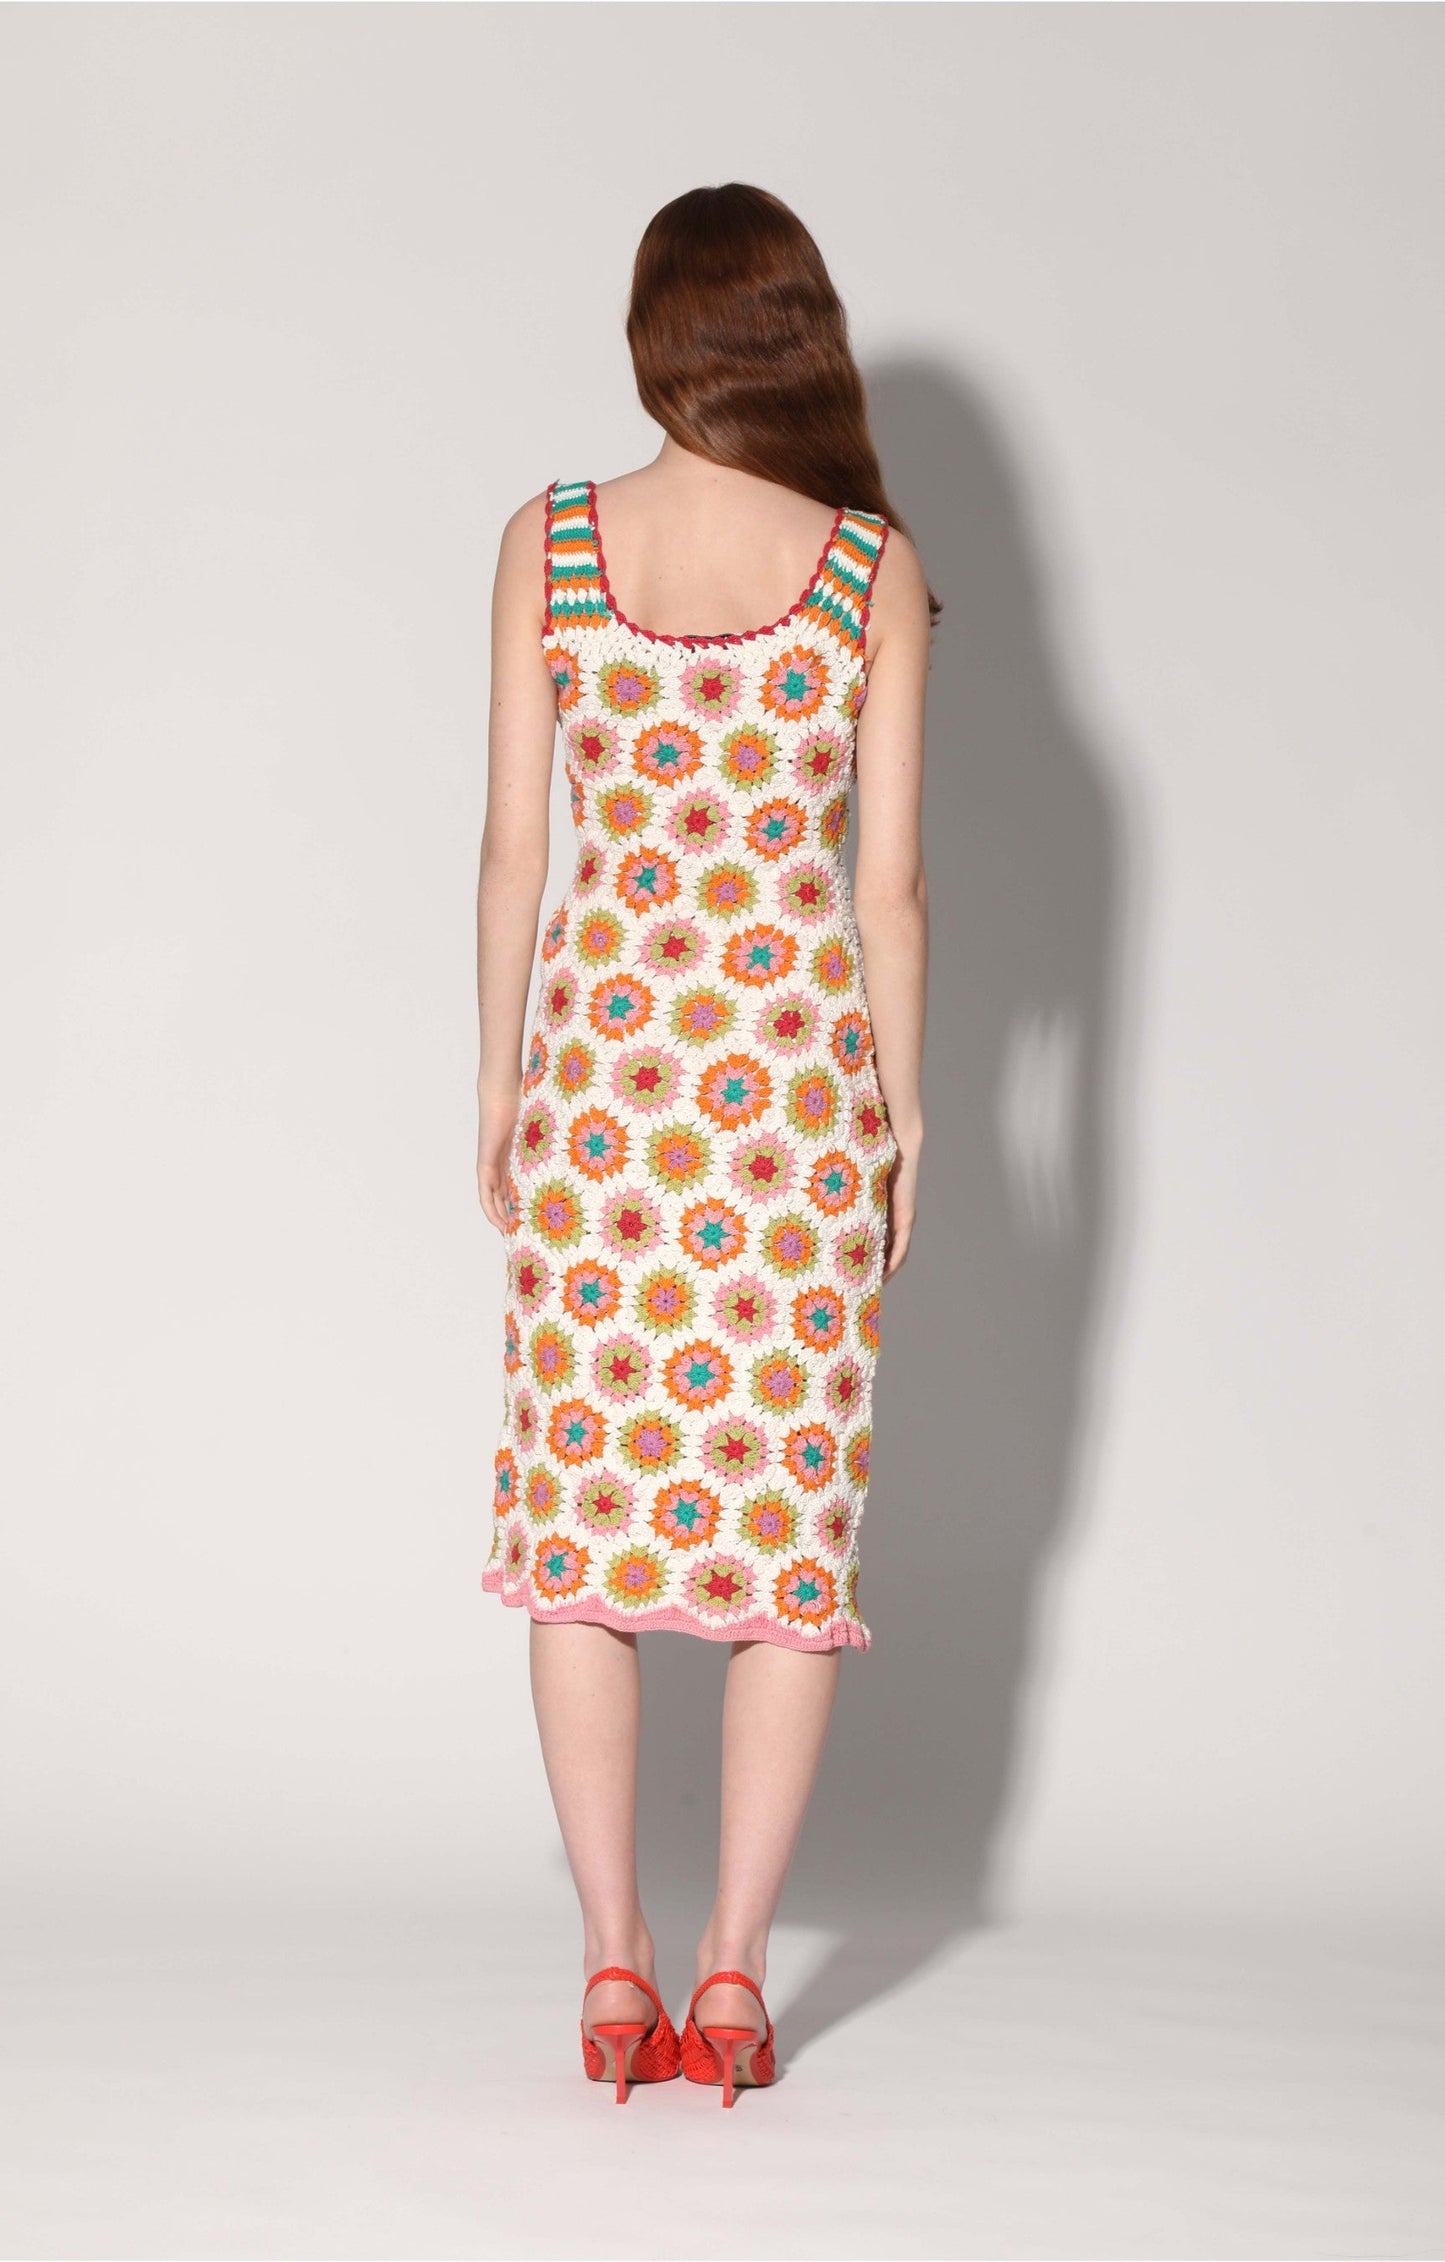 Bexanne Dress, Capri Crochet by Walter Baker